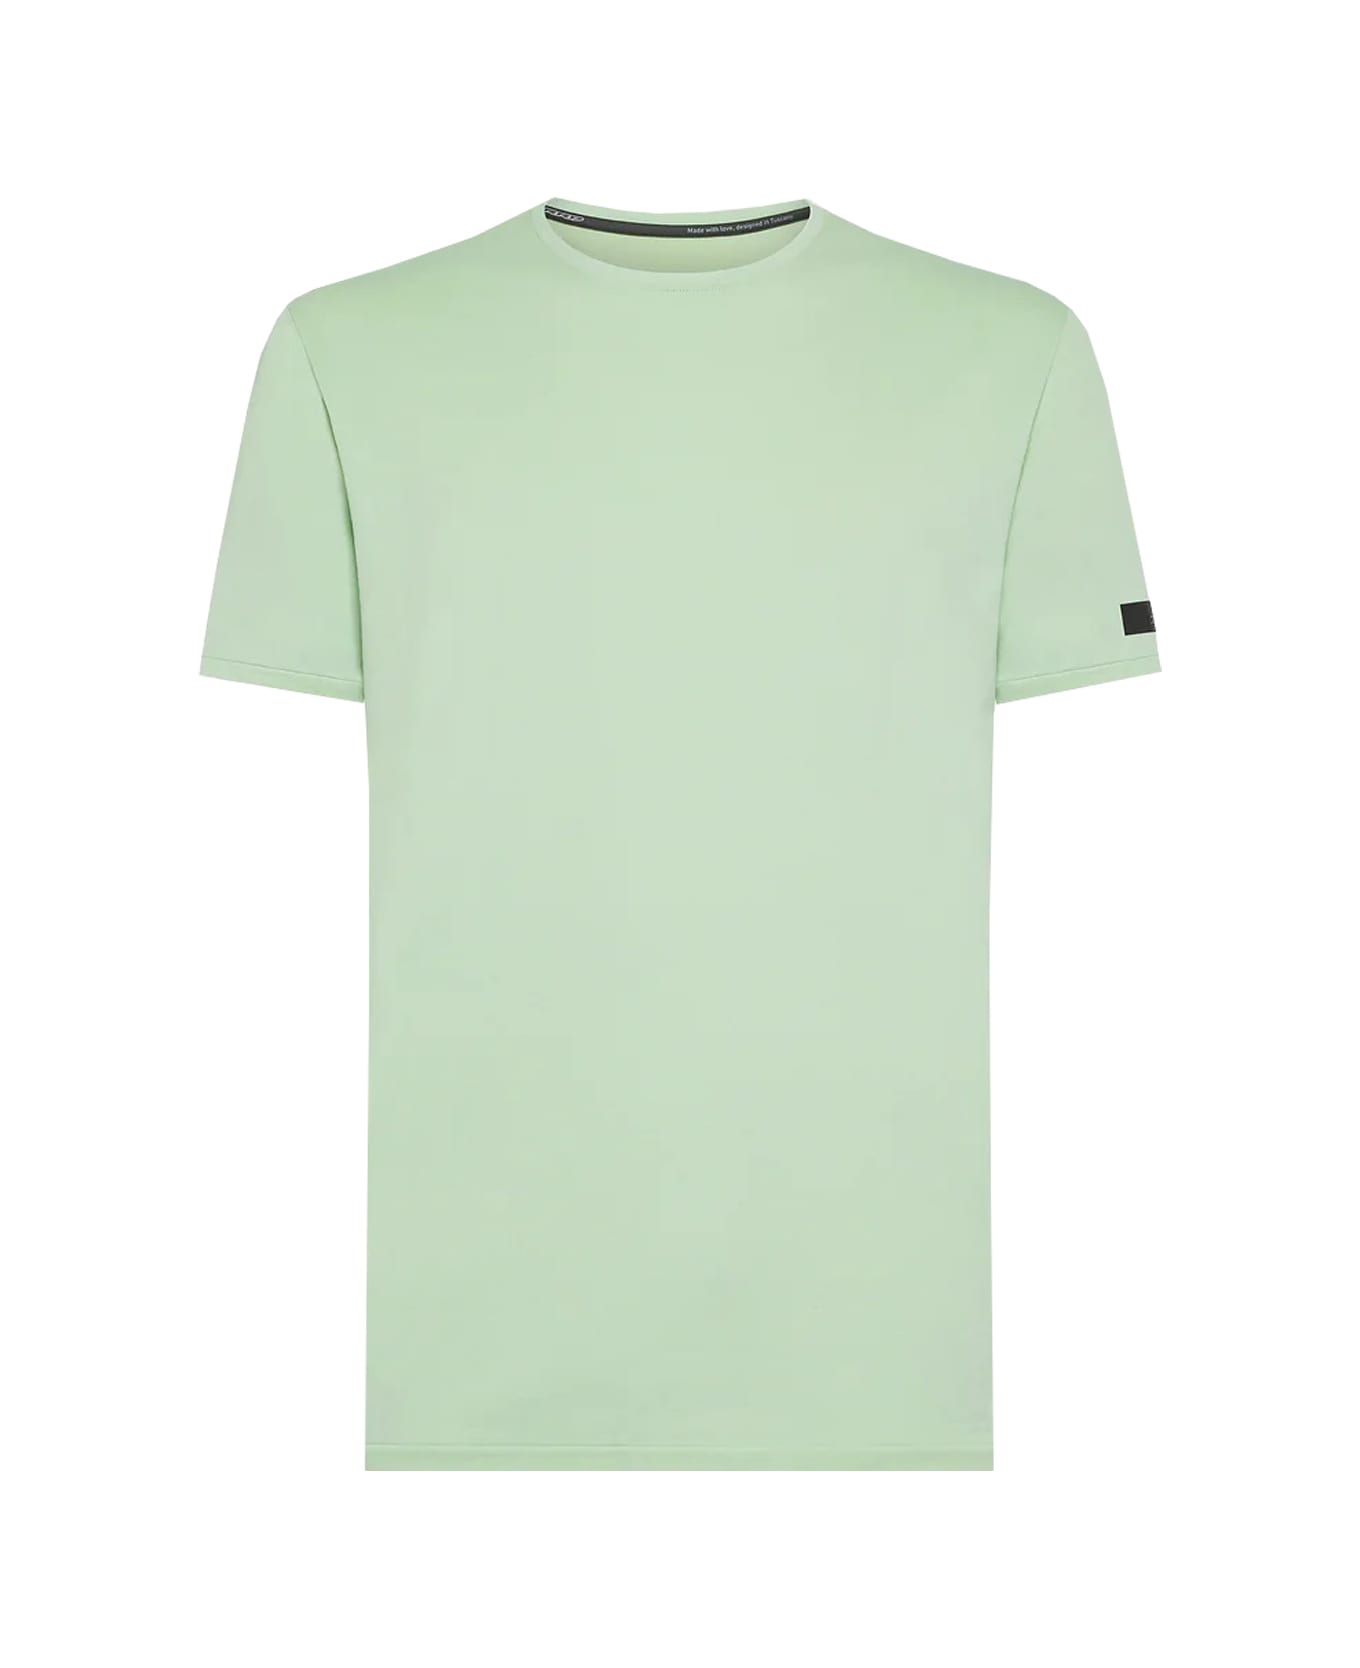 RRD - Roberto Ricci Design T-shirt - Green